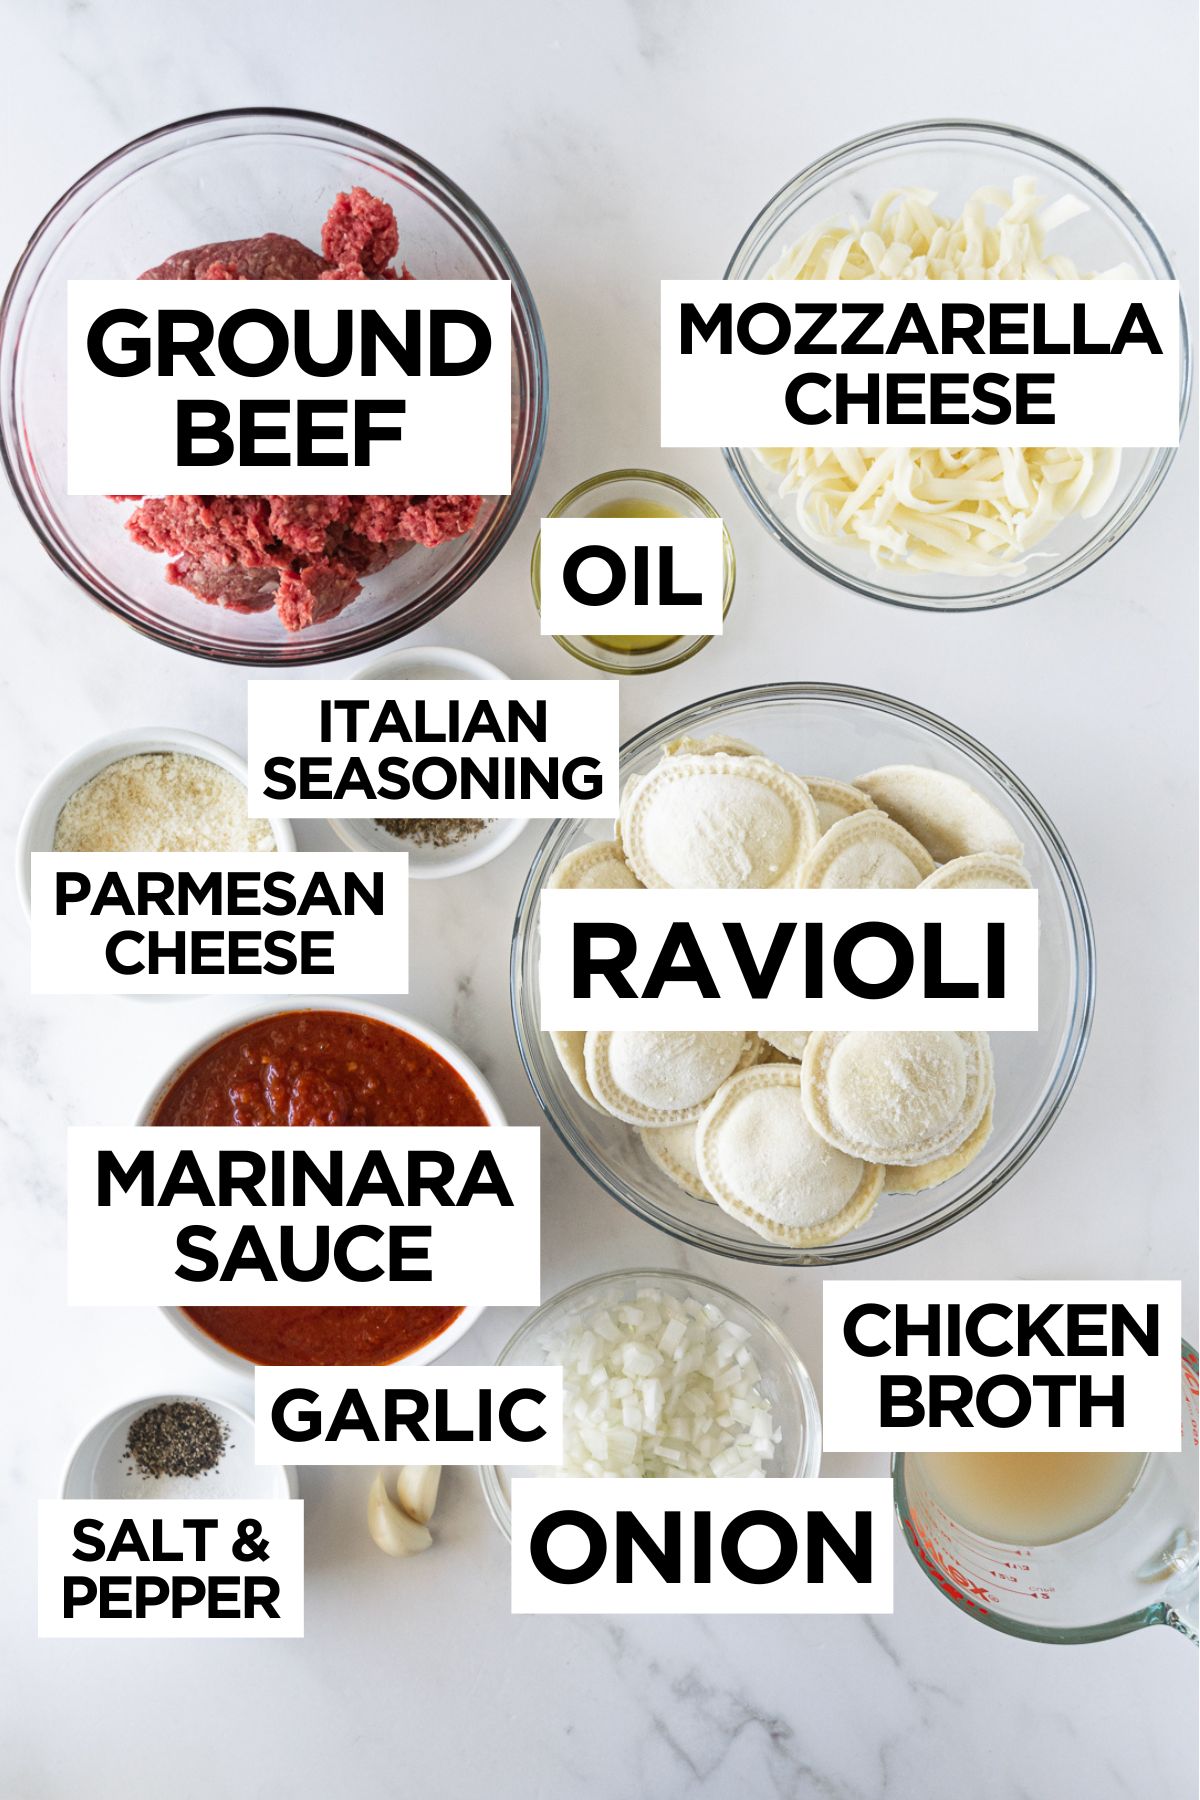 baked frozen ravioli ingredients such as ground beef, cheese, seasoning, marinara sauce, ravioli, etc.